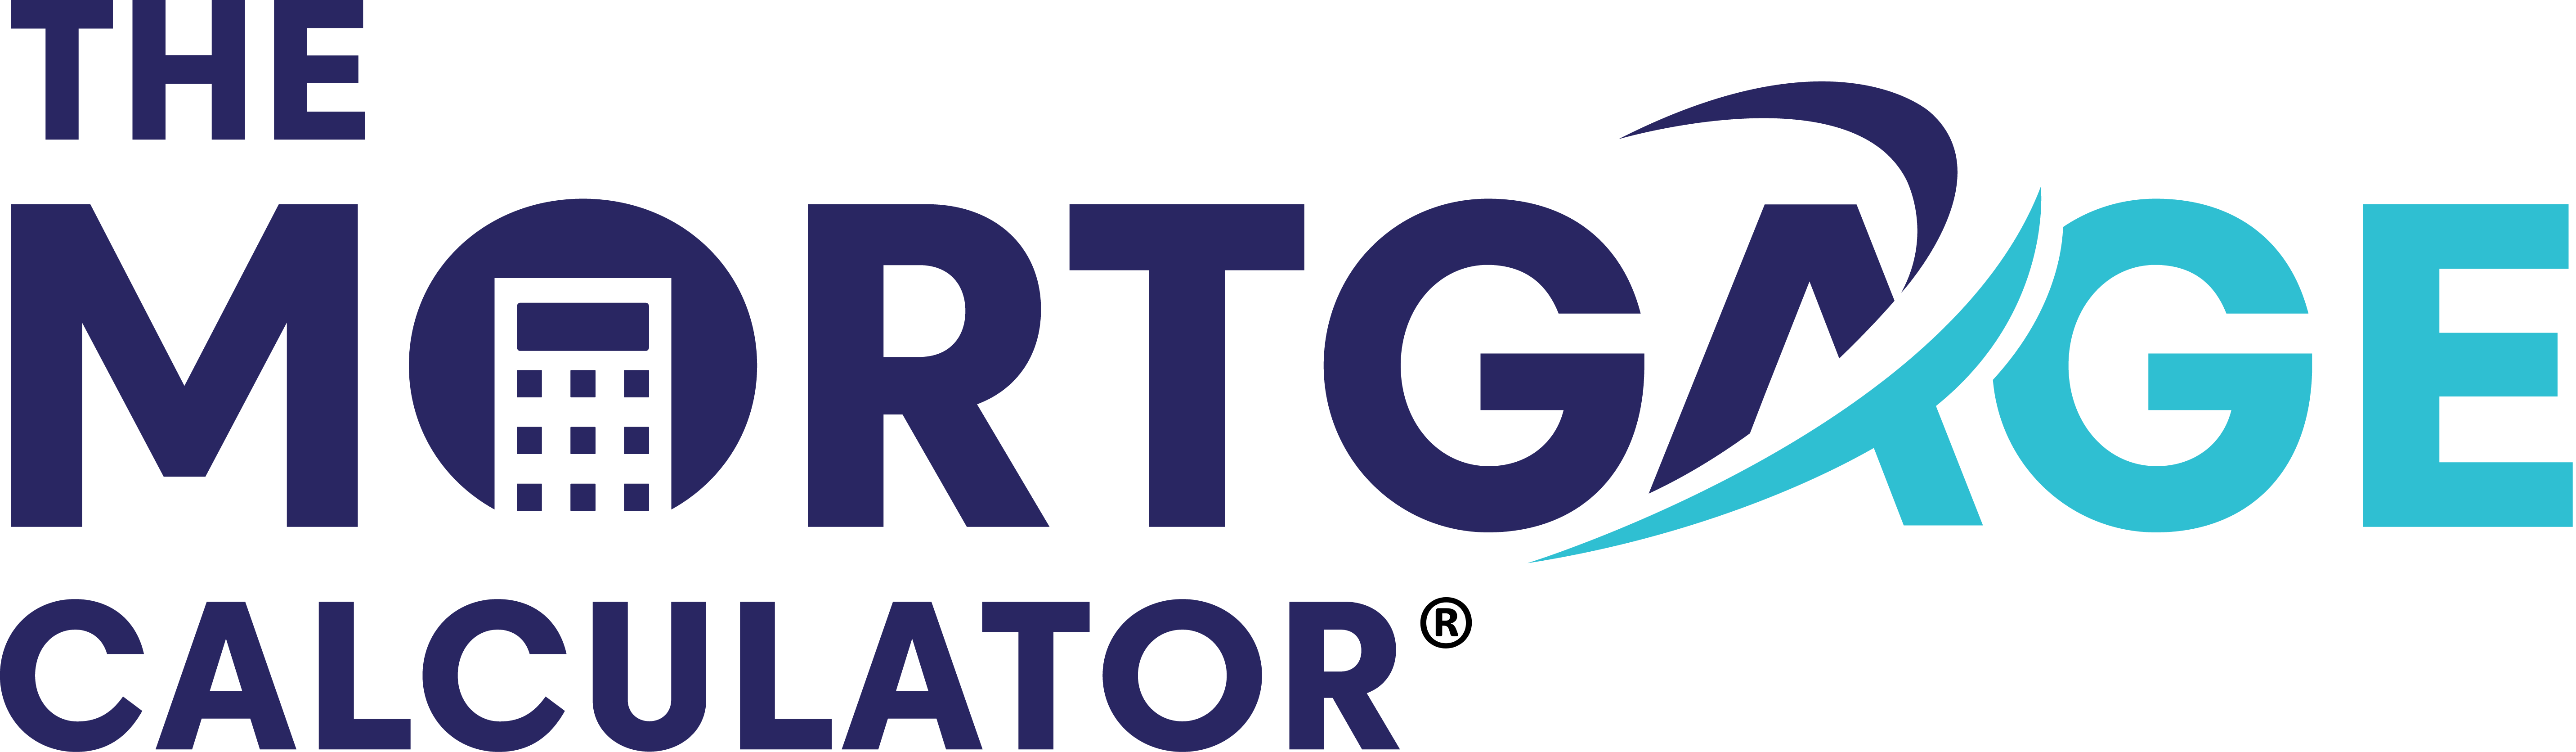 The Mortgage Calculator Logo